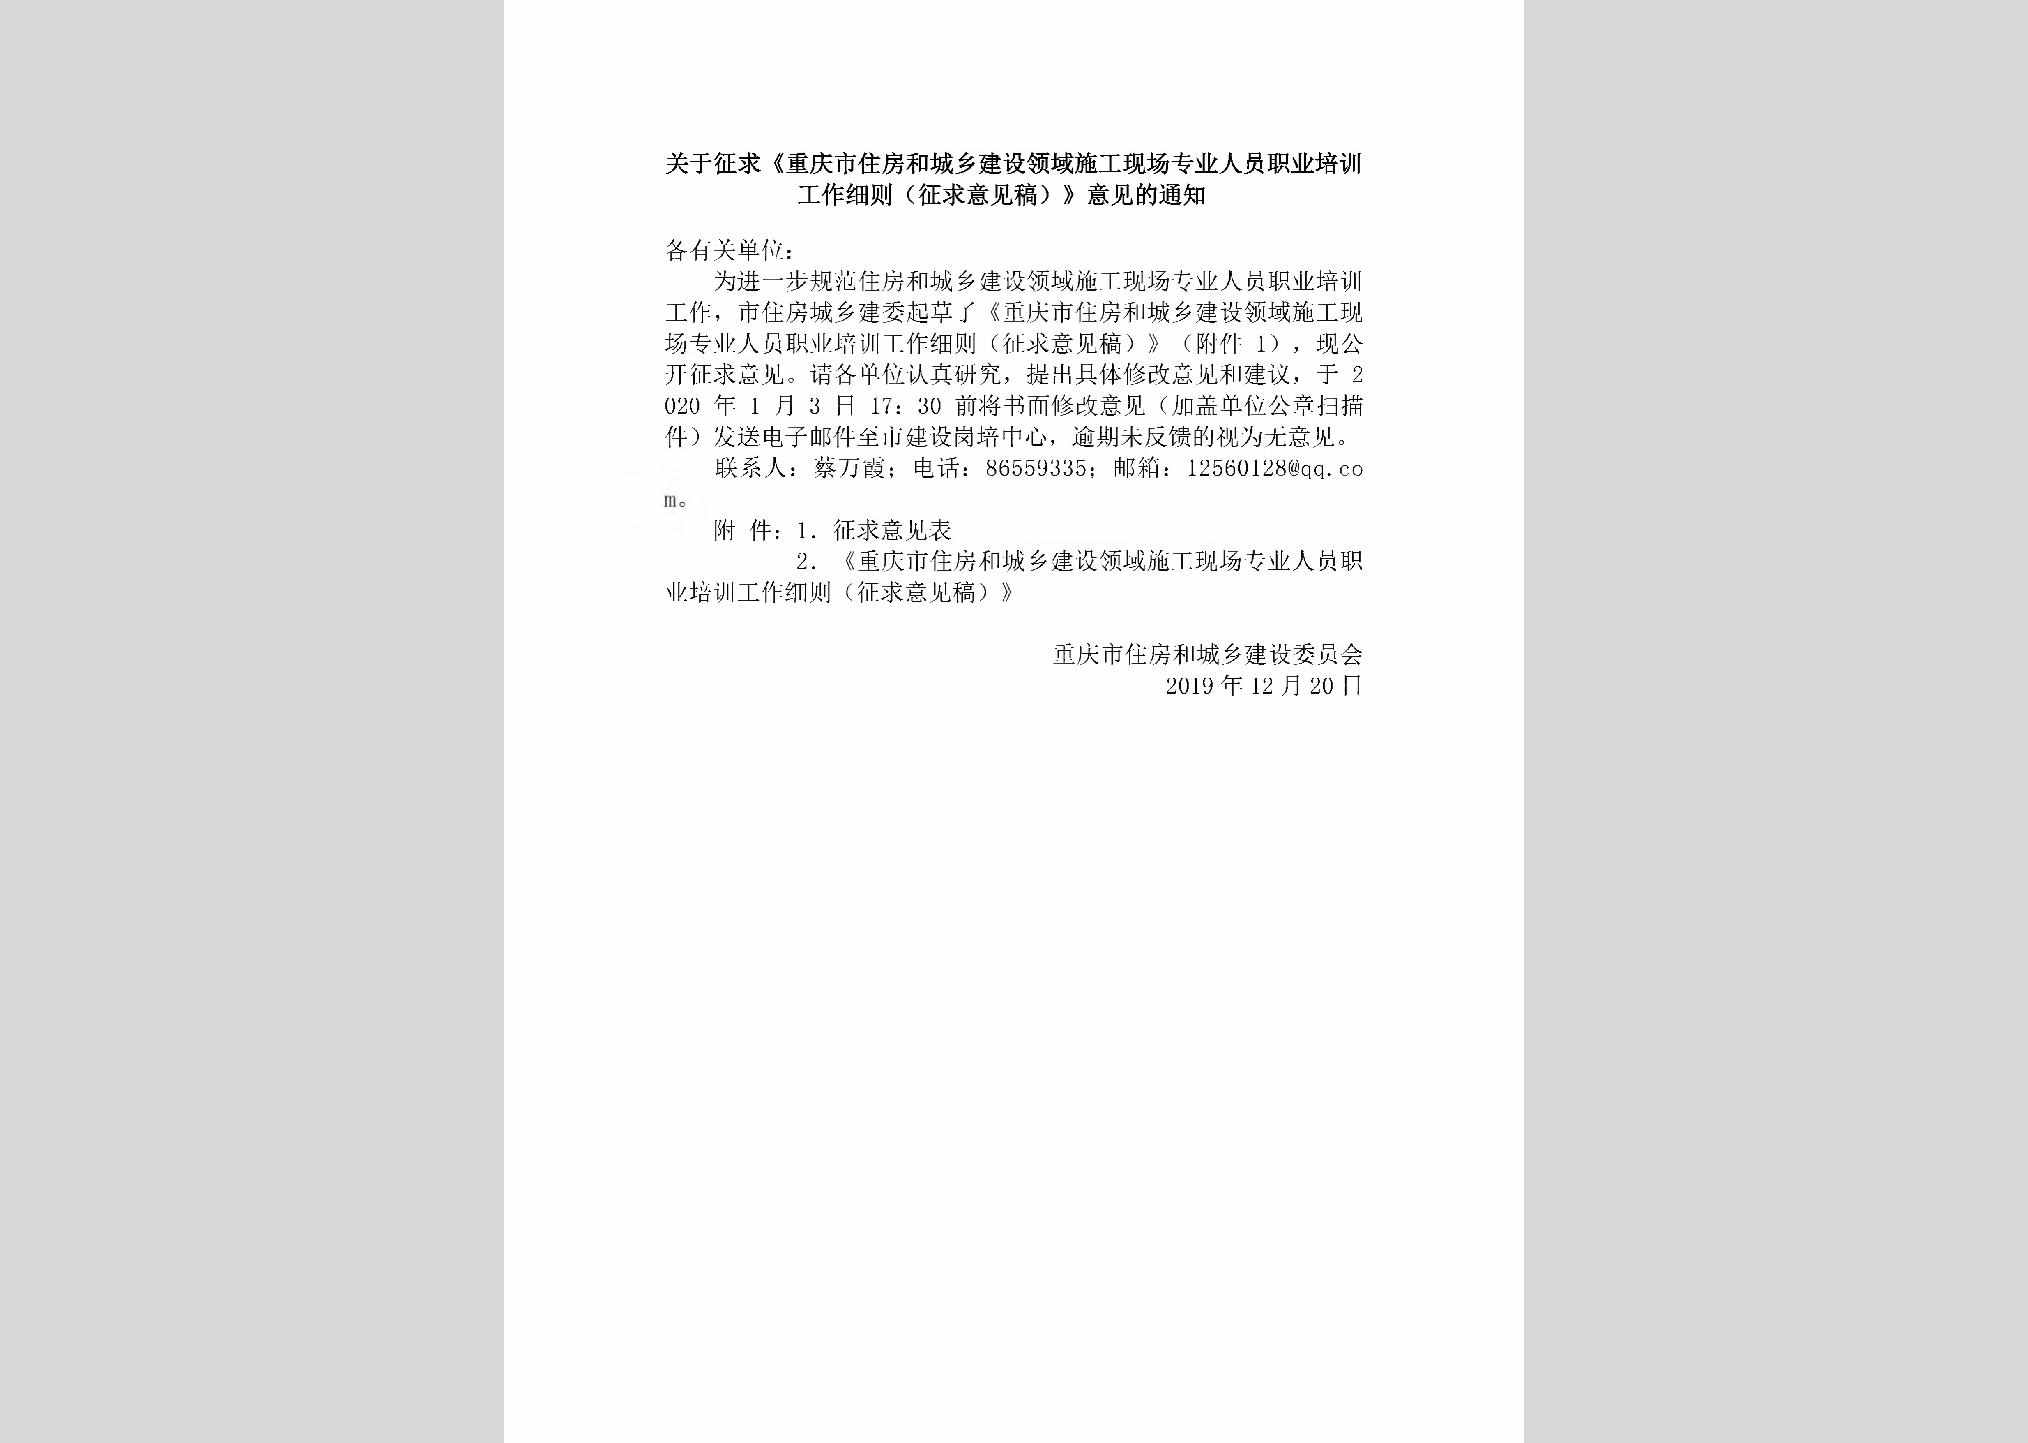 CQ-ZFCXJSLY-2019：关于征求《重庆市住房和城乡建设领域施工现场专业人员职业培训工作细则（征求意见稿）》意见的通知